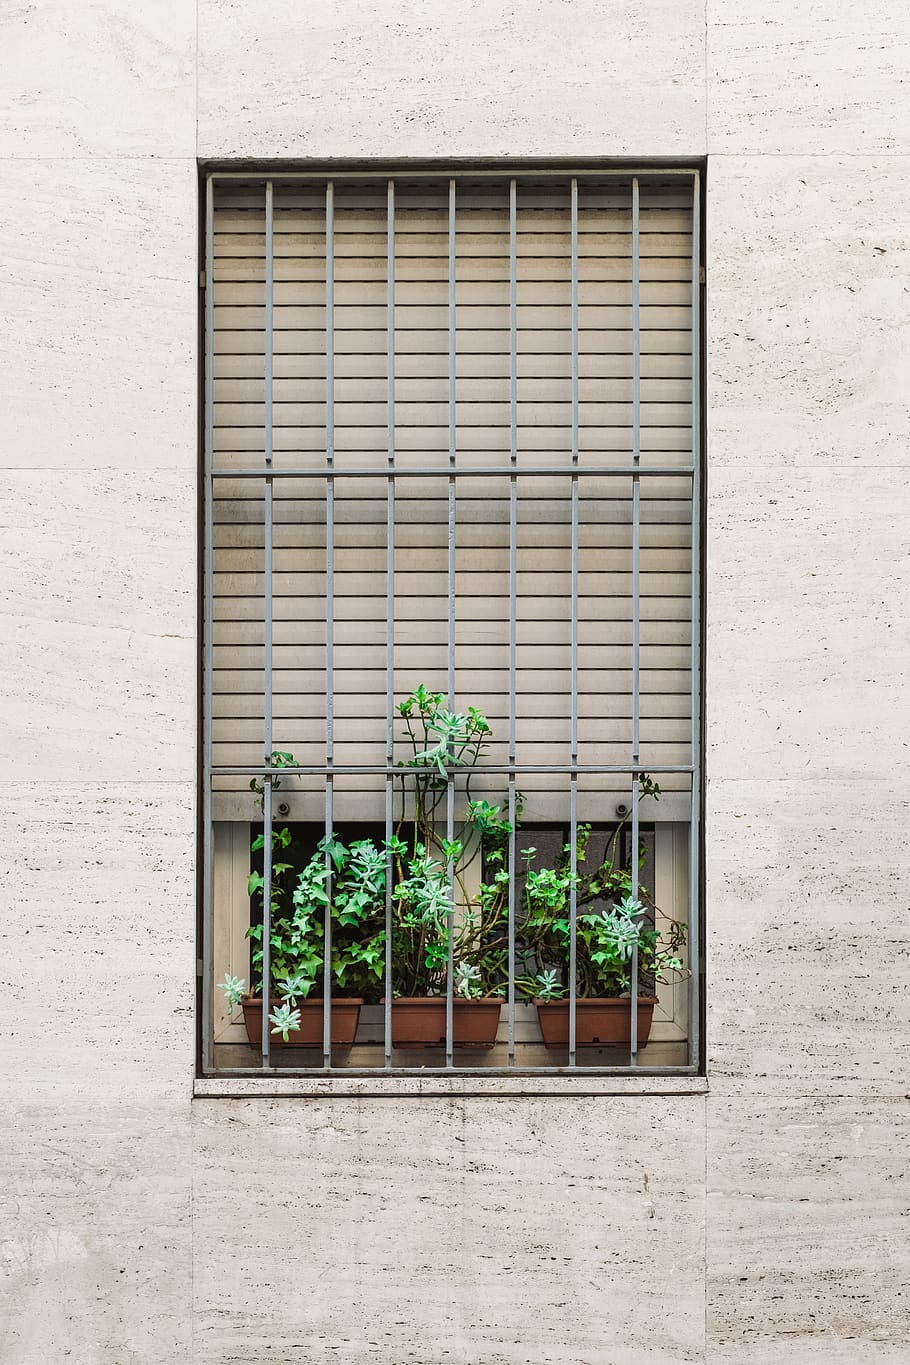 symmetry, aesthetics, windows, grills, plants, garden, pot, green, wall, architecture